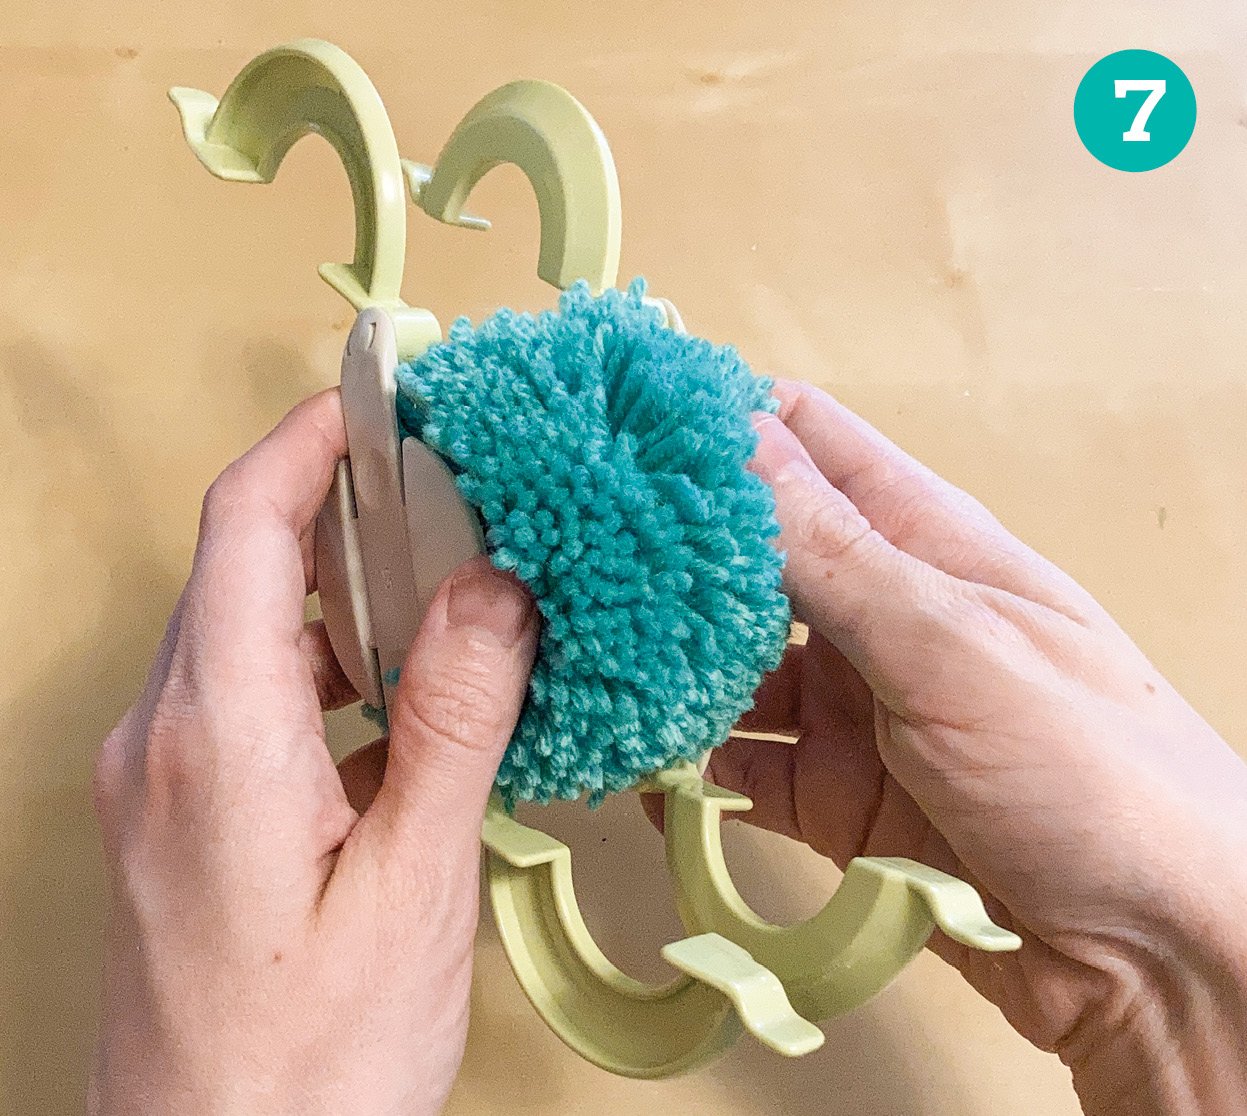 How to Make a Pom Pom - A Crocheted Simplicity